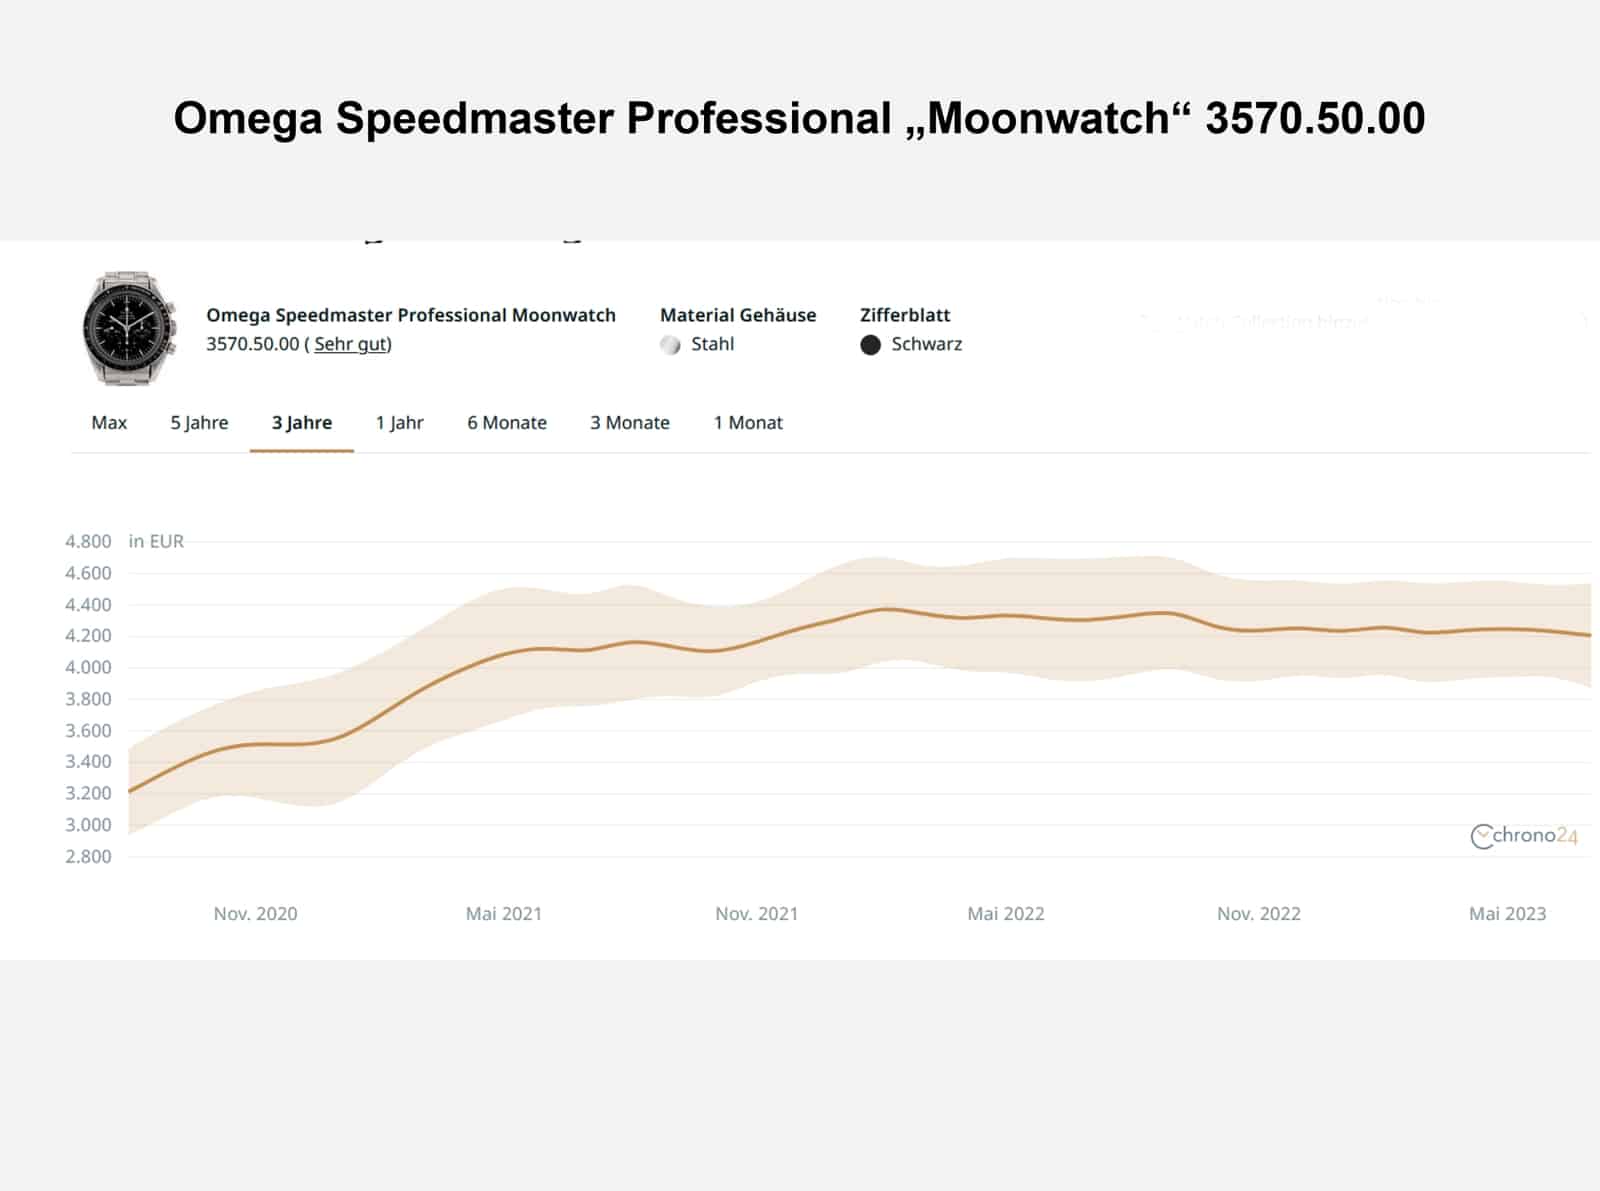 Omega Speedmaster Professional Moonwatch 3570.50.00 Preisentwicklung Chrono24 202307